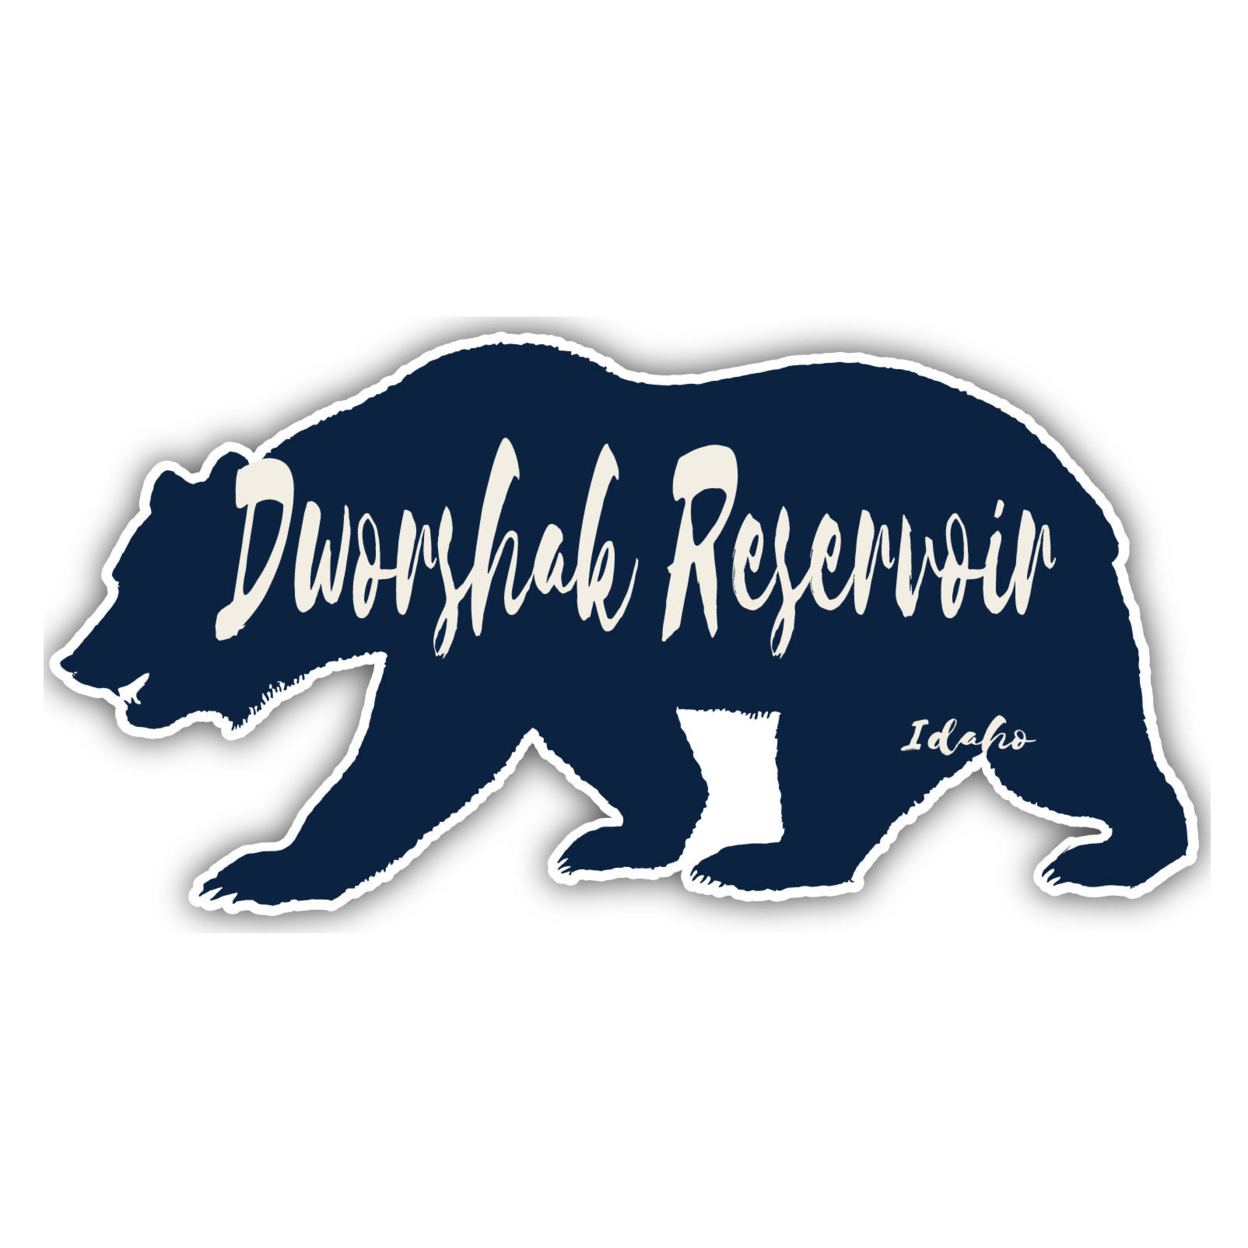 Dworshak Reservoir Idaho Souvenir Decorative Stickers (Choose Theme And Size) - 4-Pack, 2-Inch, Camp Life